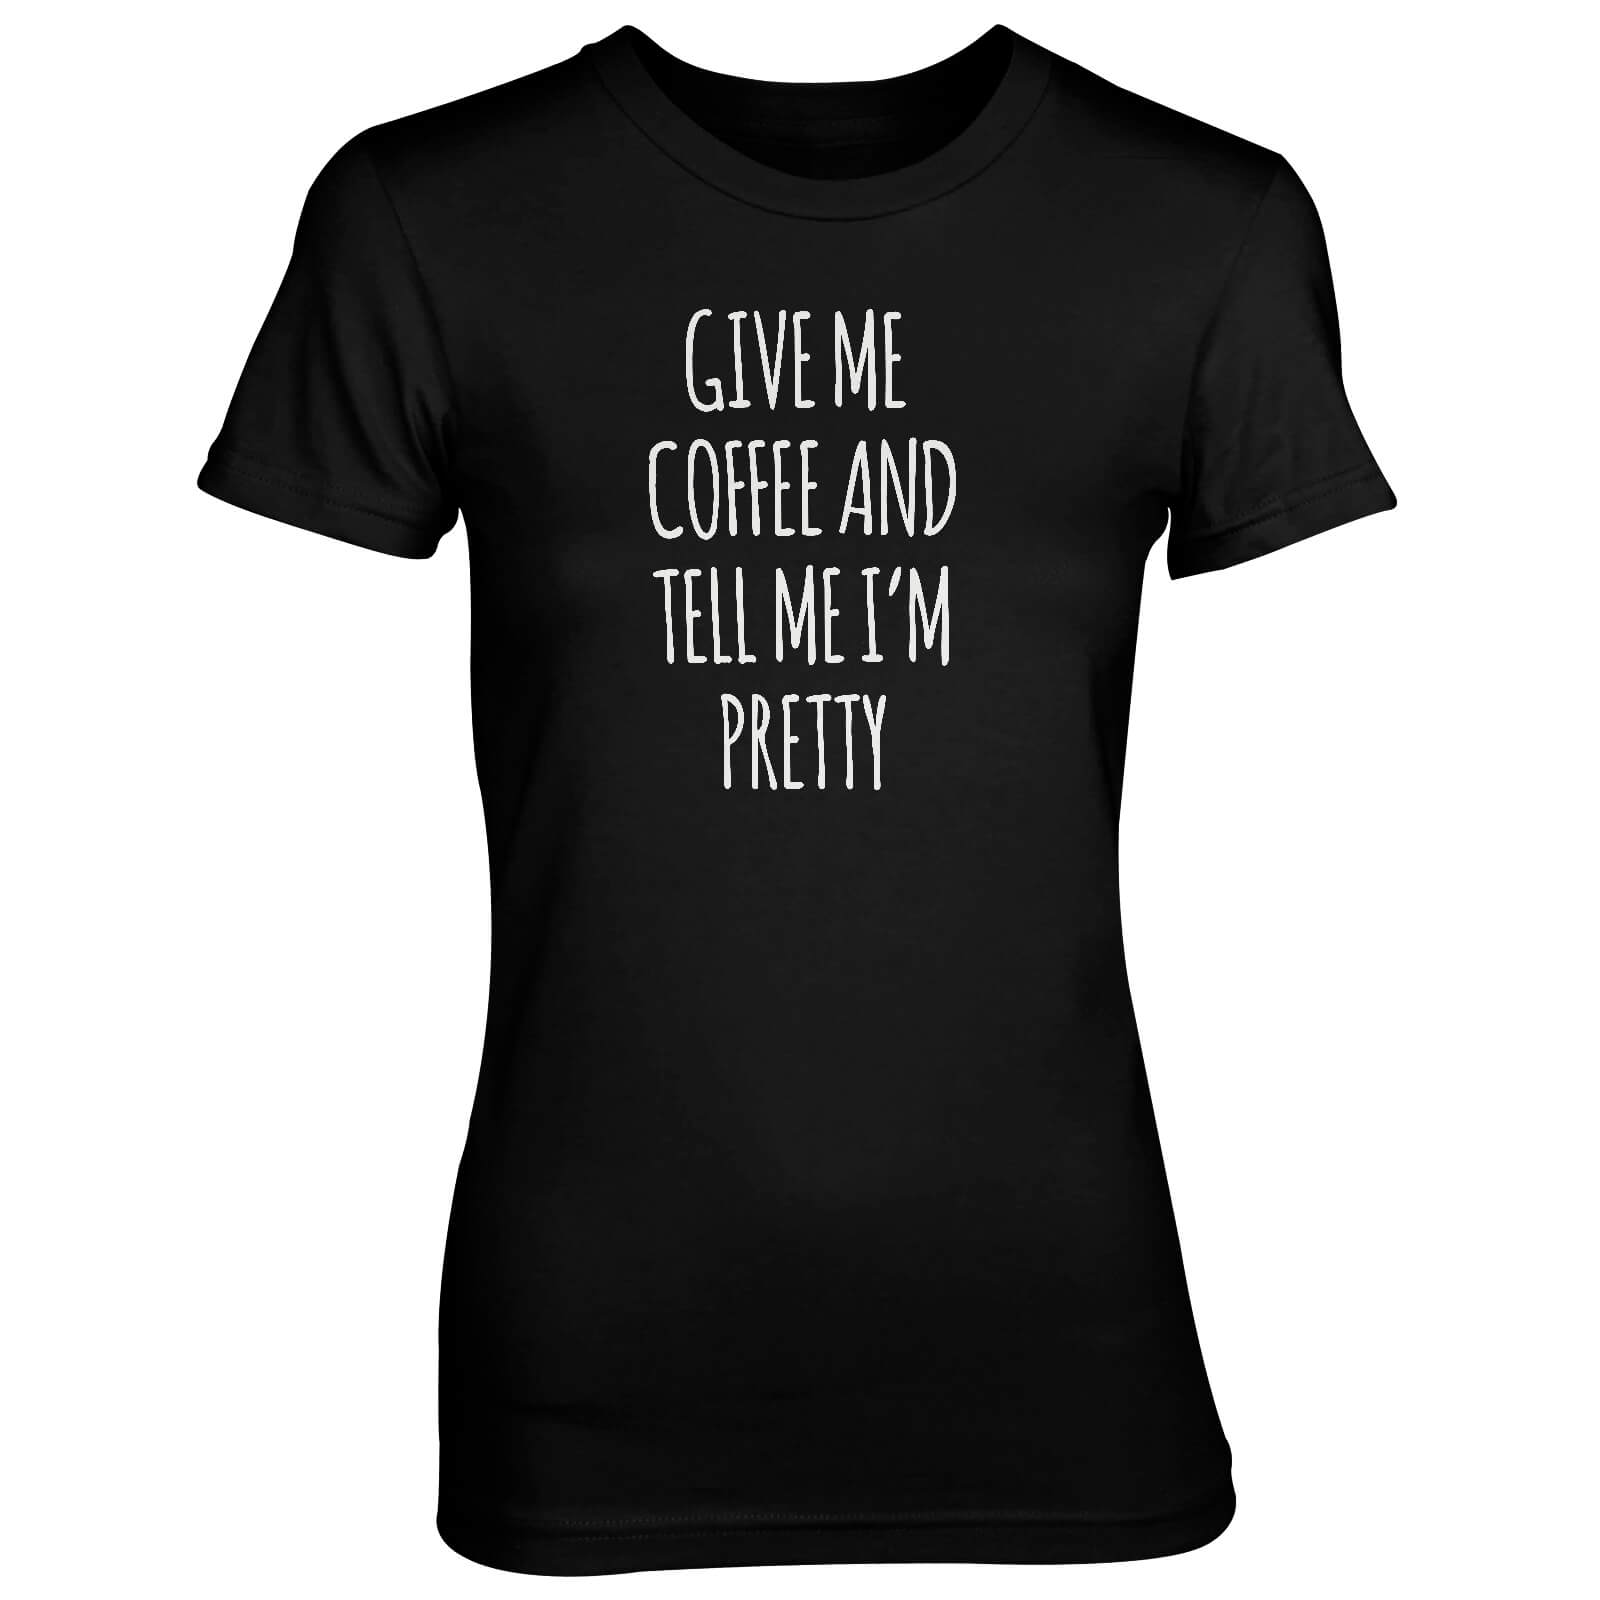 Give Me Coffee And Tell Me I'm Pretty Women's Black T-Shirt - S - Black